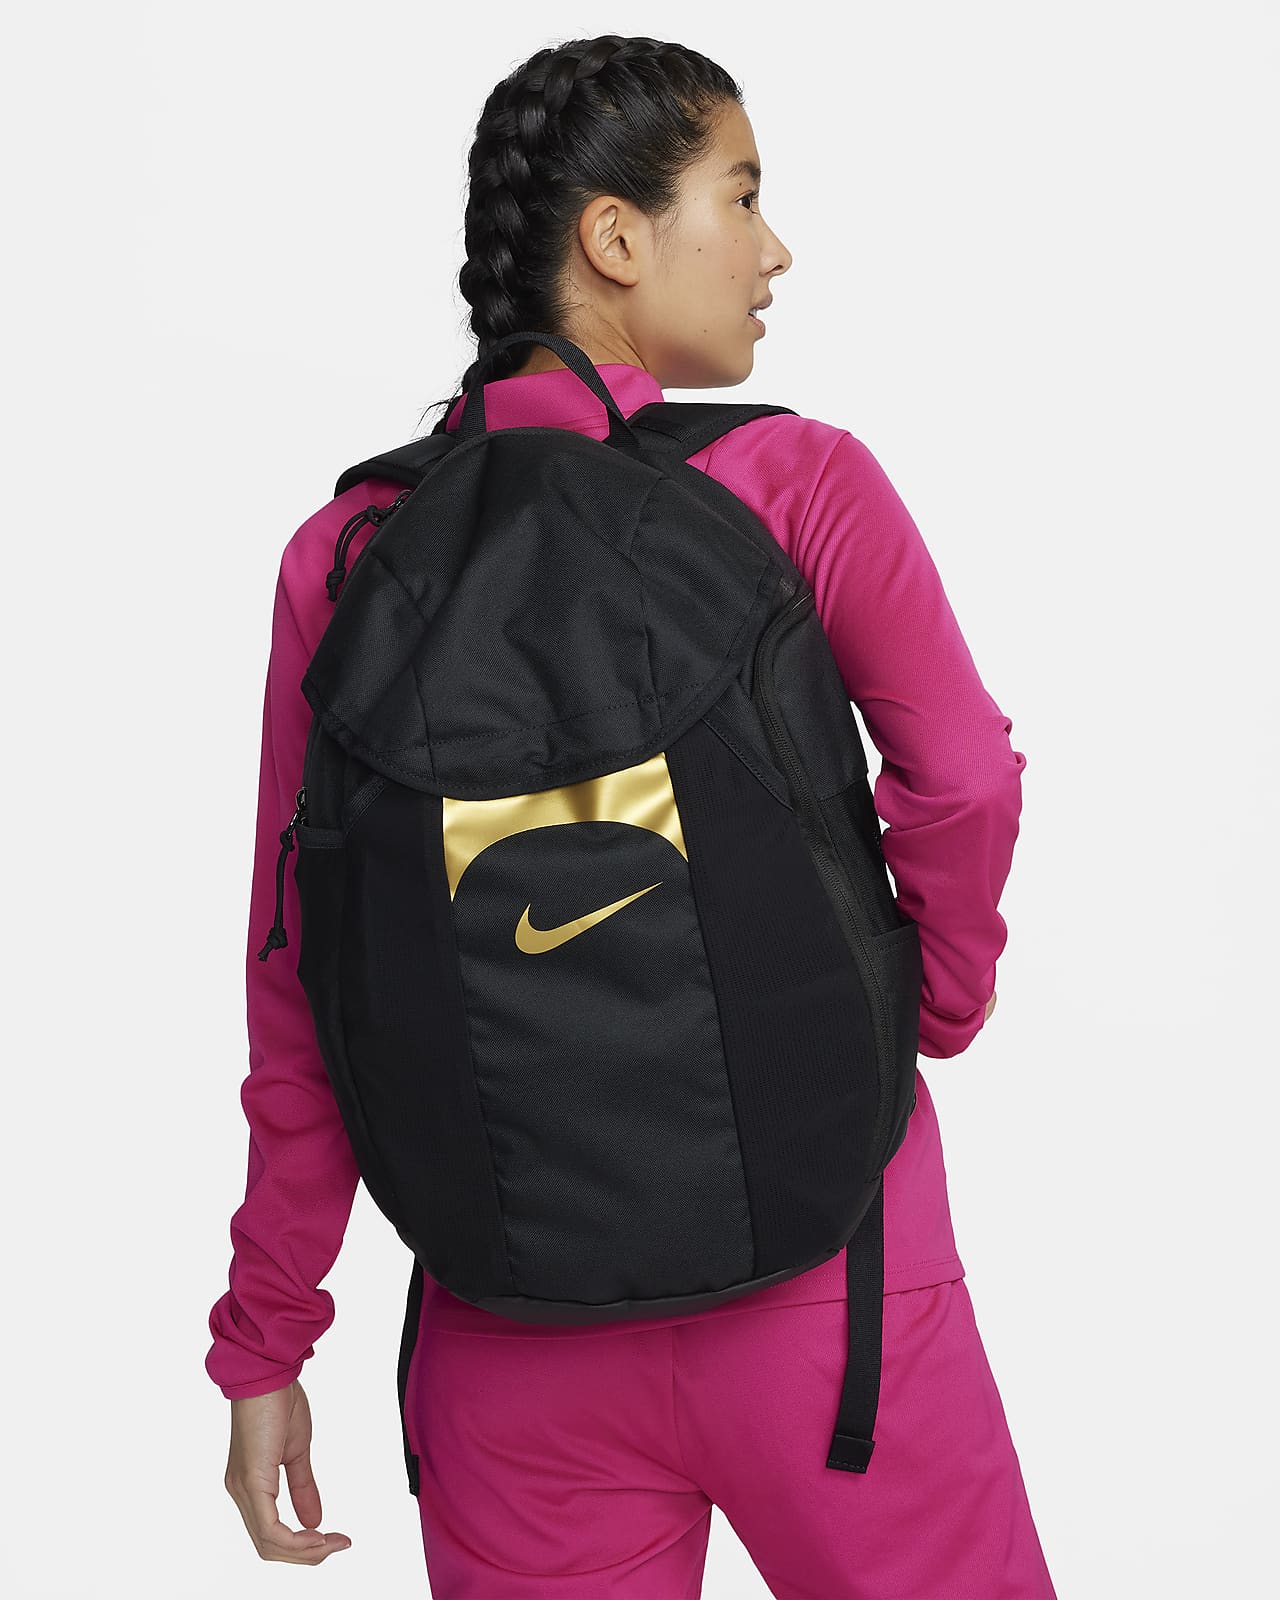 Nike Academy Team ryggsekk (30 L)